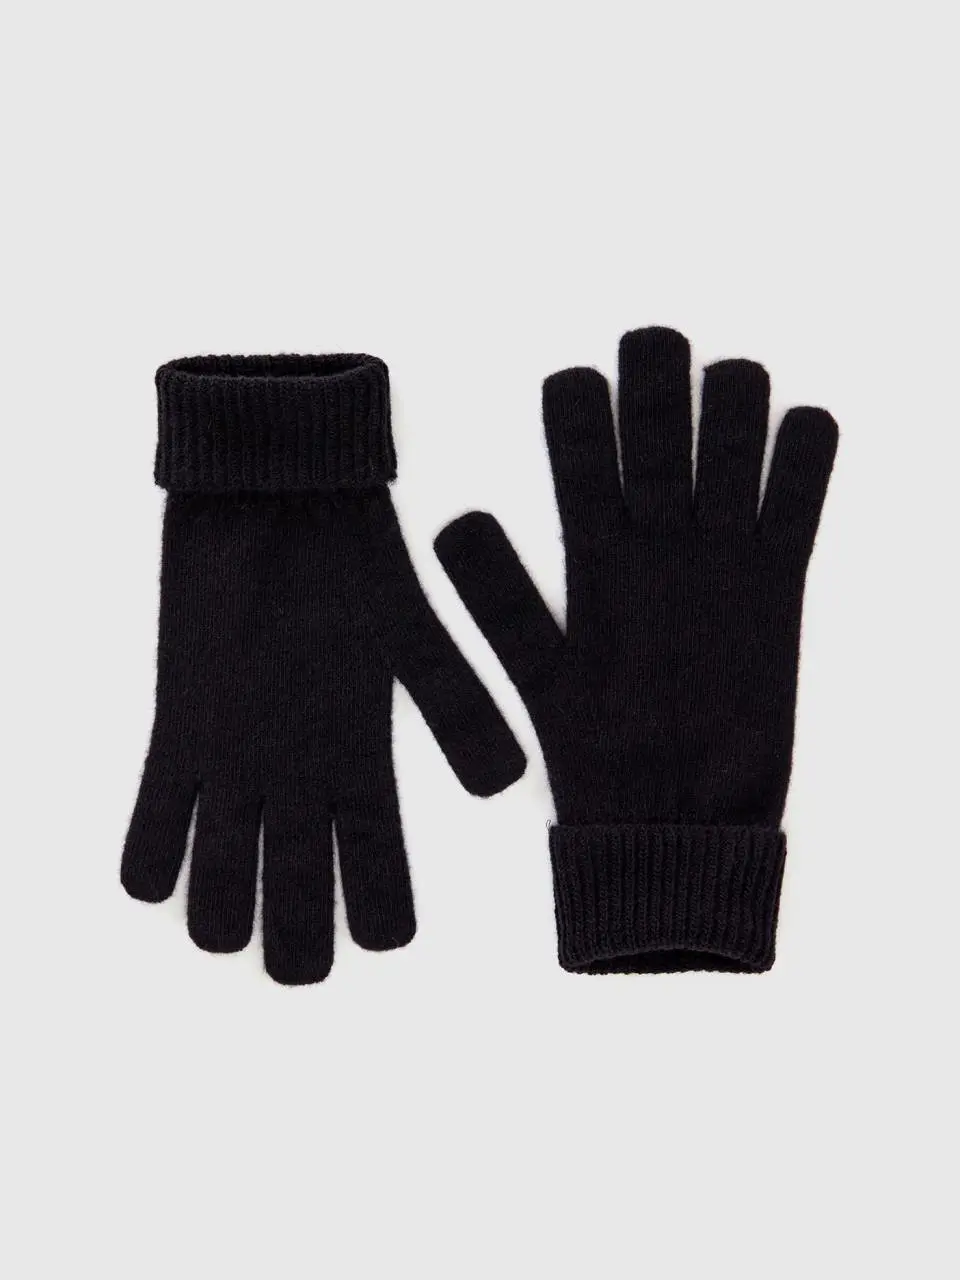 Benetton black gloves in pure merino wool. 1